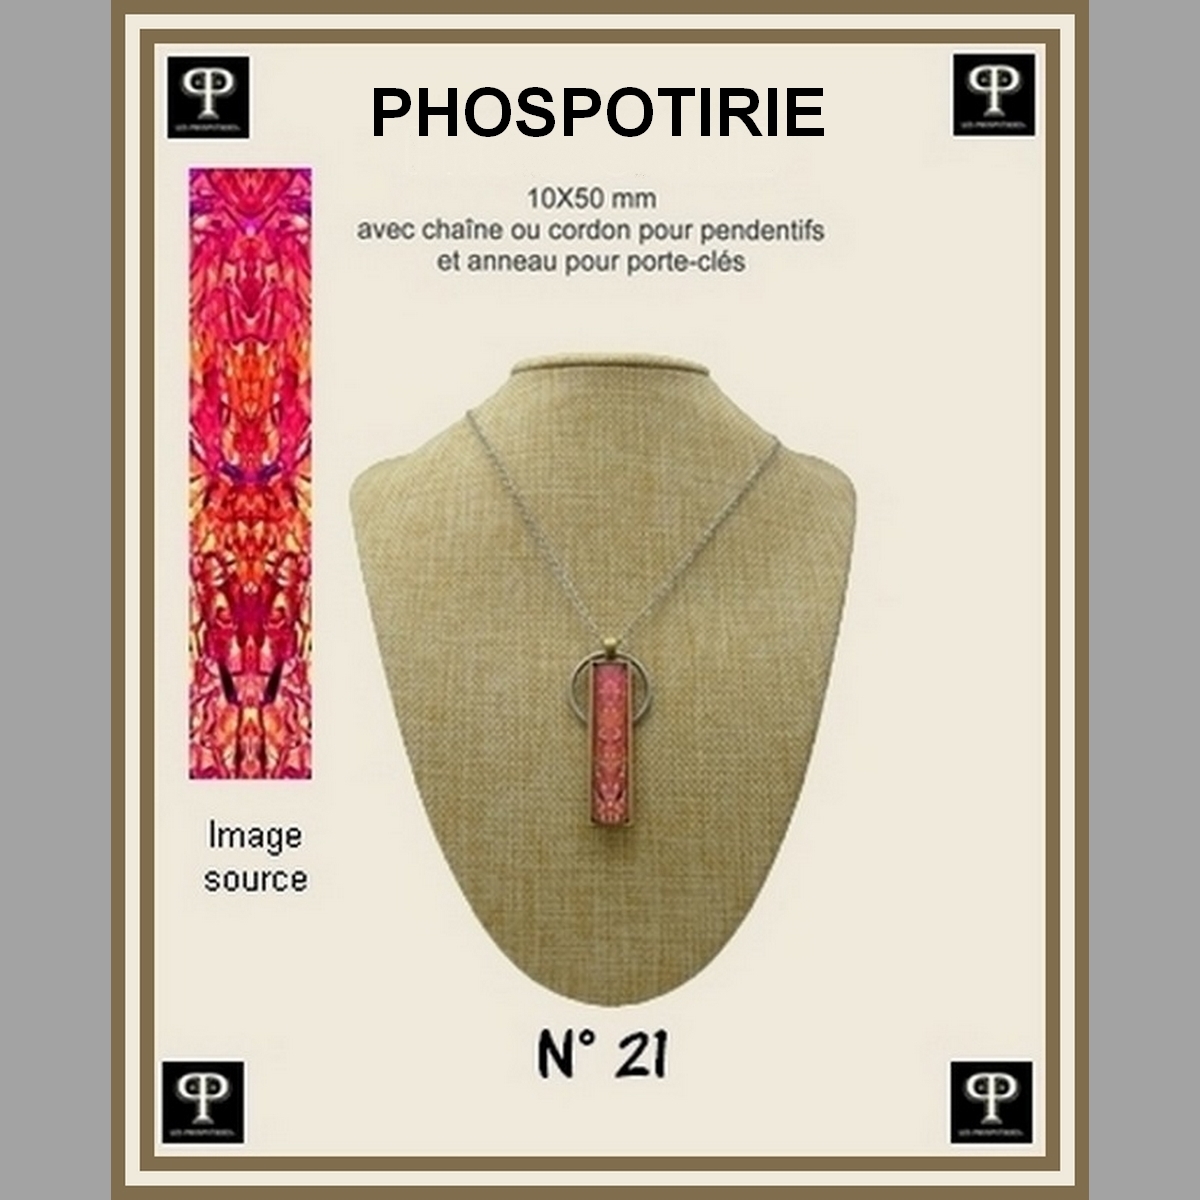 Phospotirie version TOTEM 10X50 mm N°21 pour pendentifs ou porte-clés